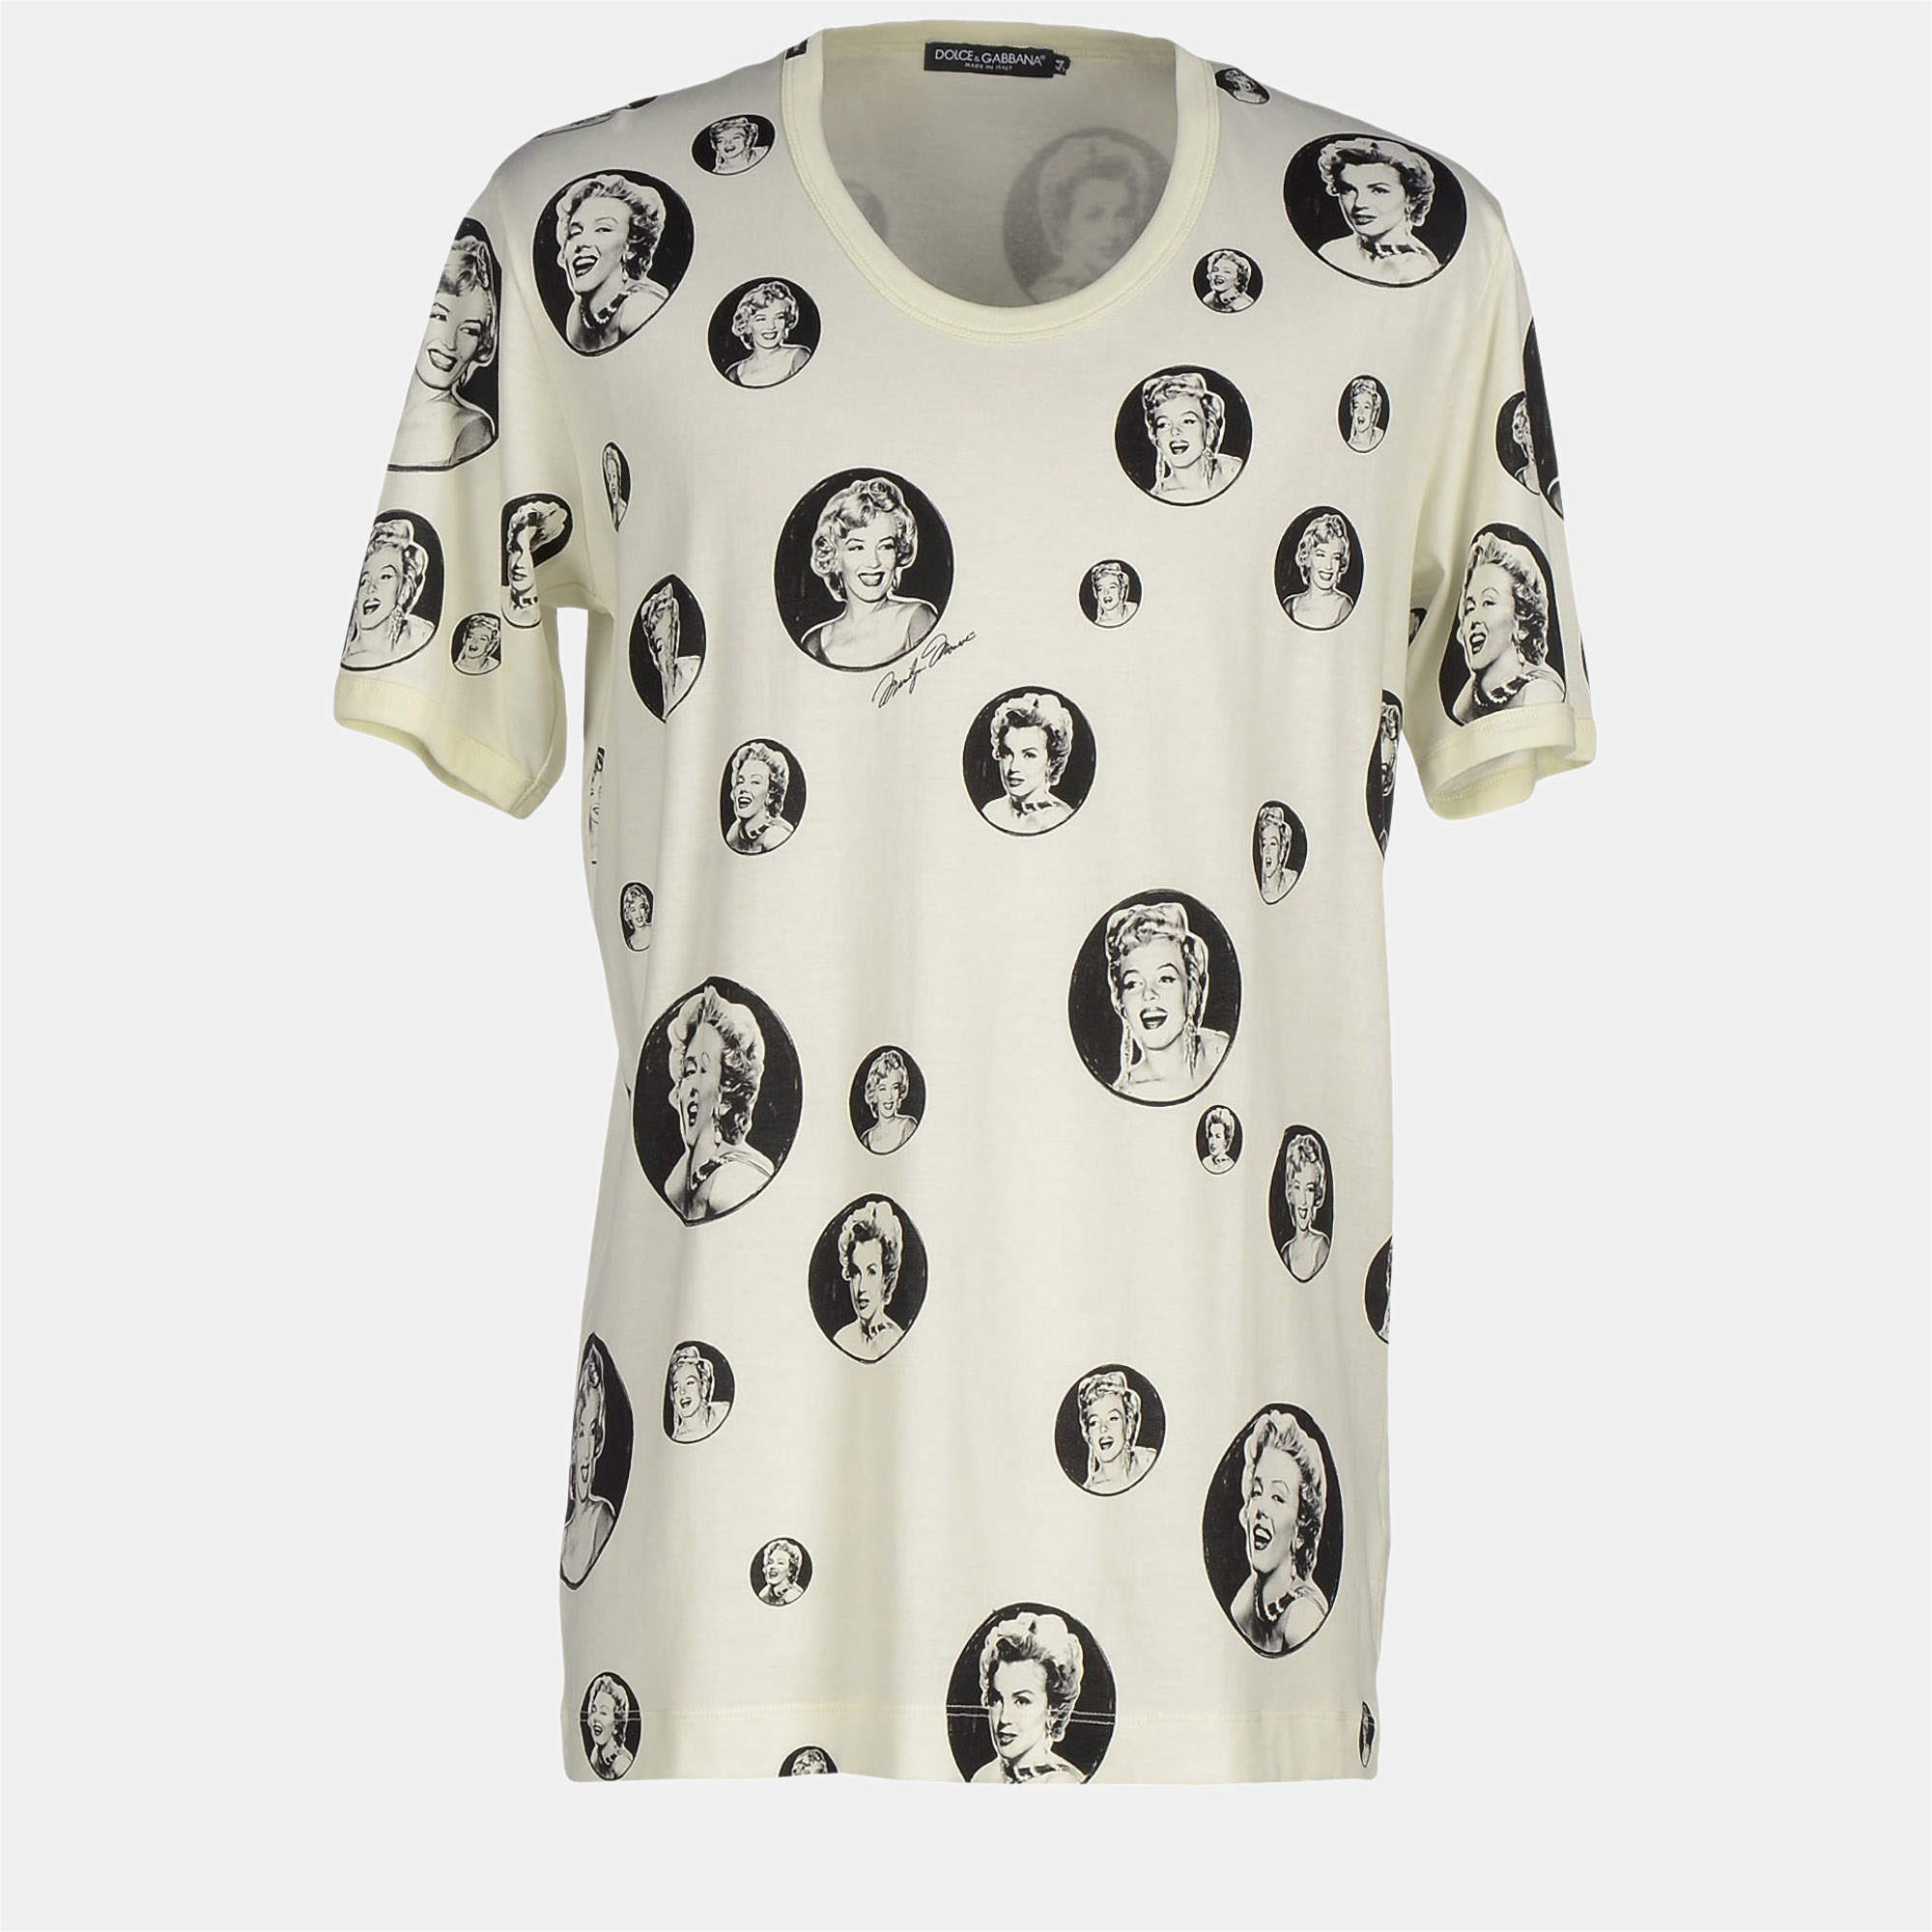 Dolce & Gabbana Ivory Marilyn Monroe Print Cotton T-Shirt M (IT 48)